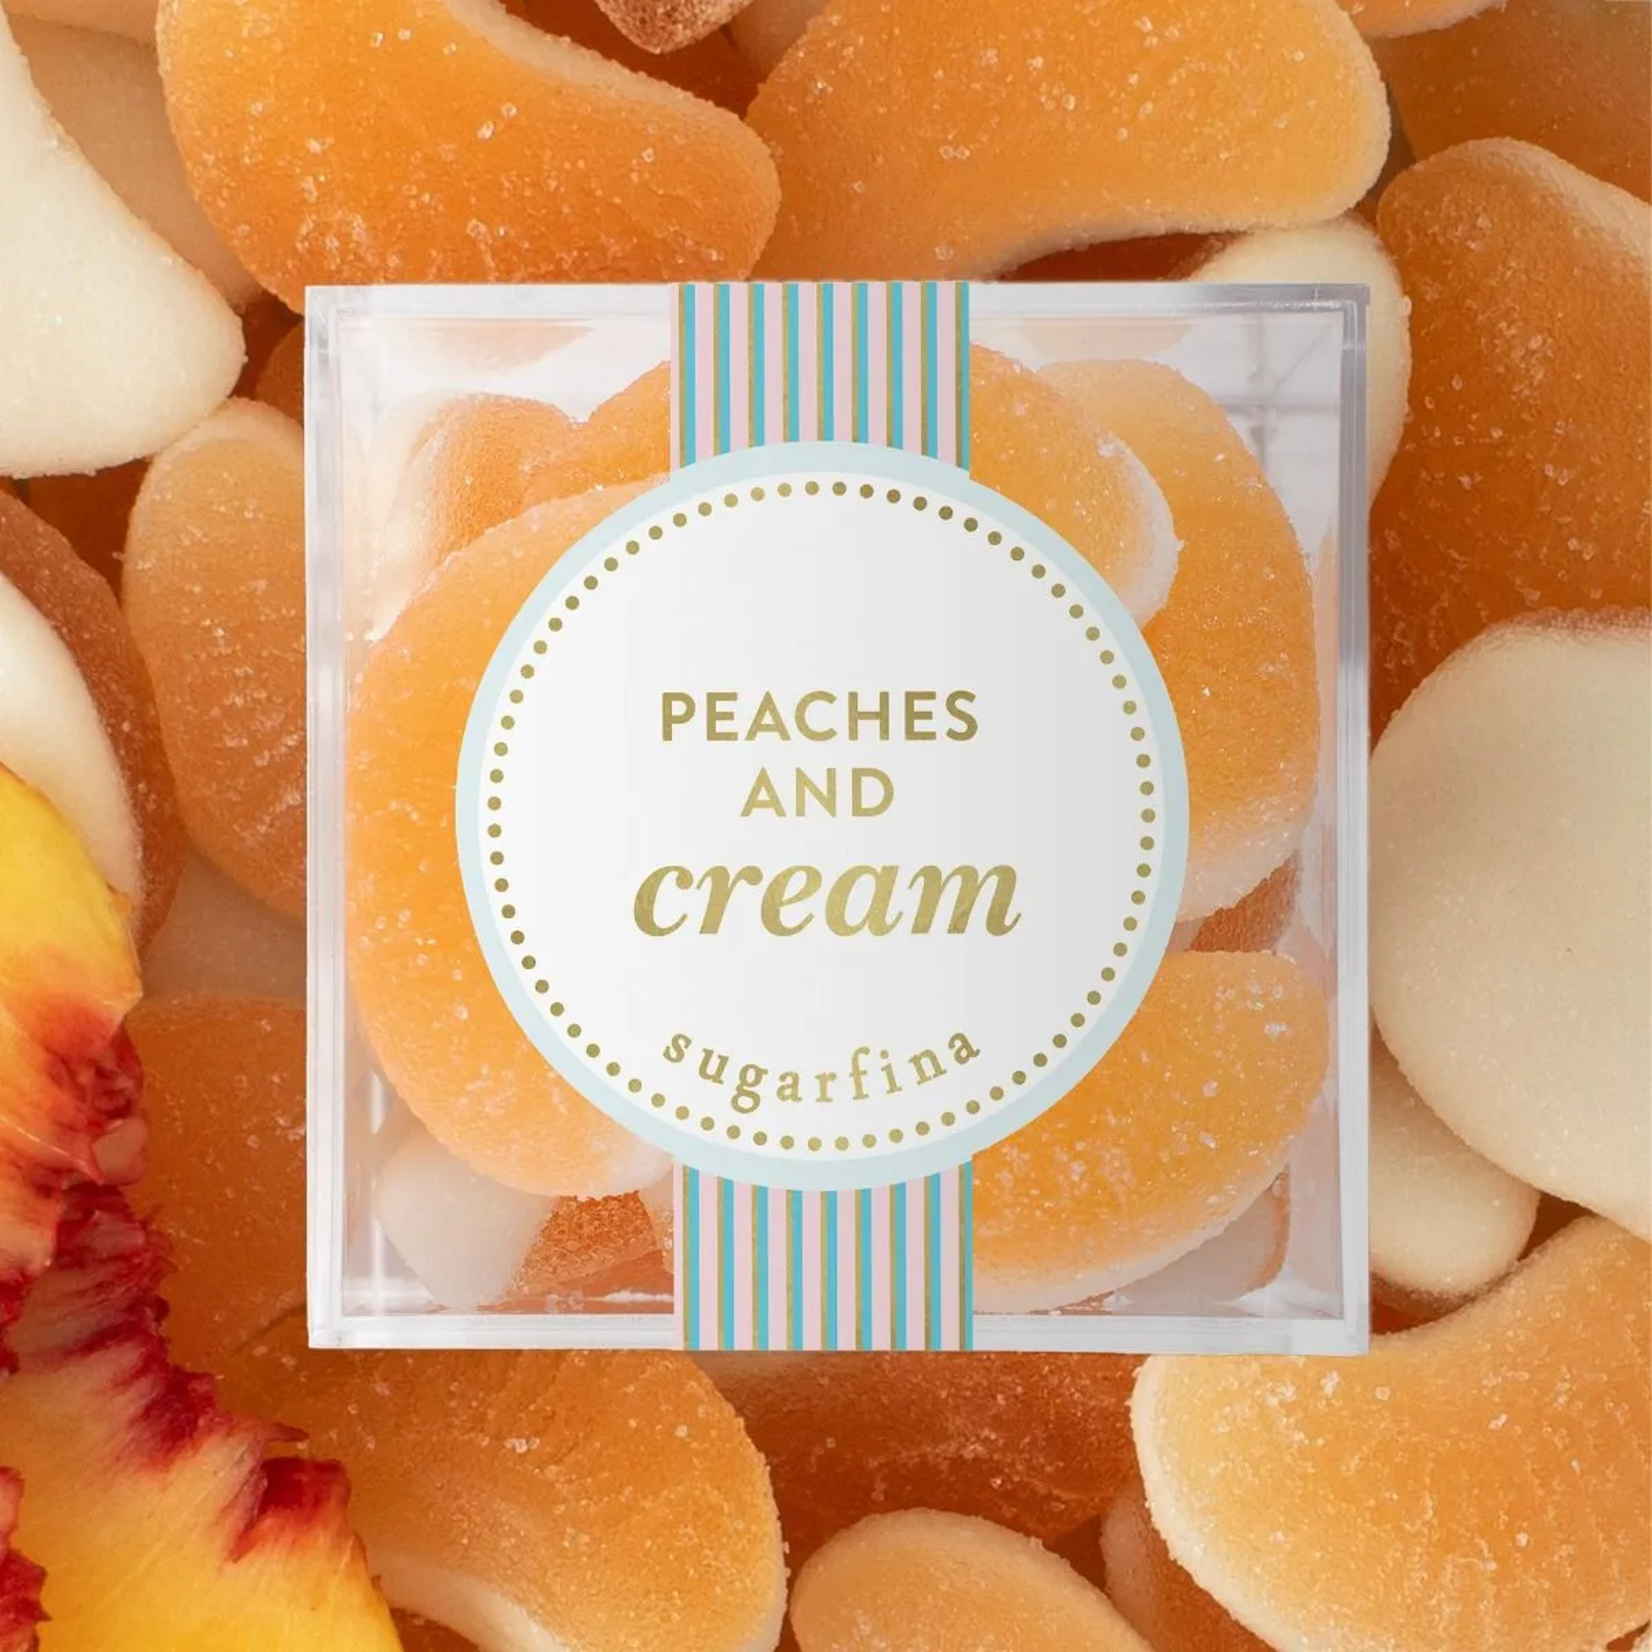 sugarfina Peaches and Cream